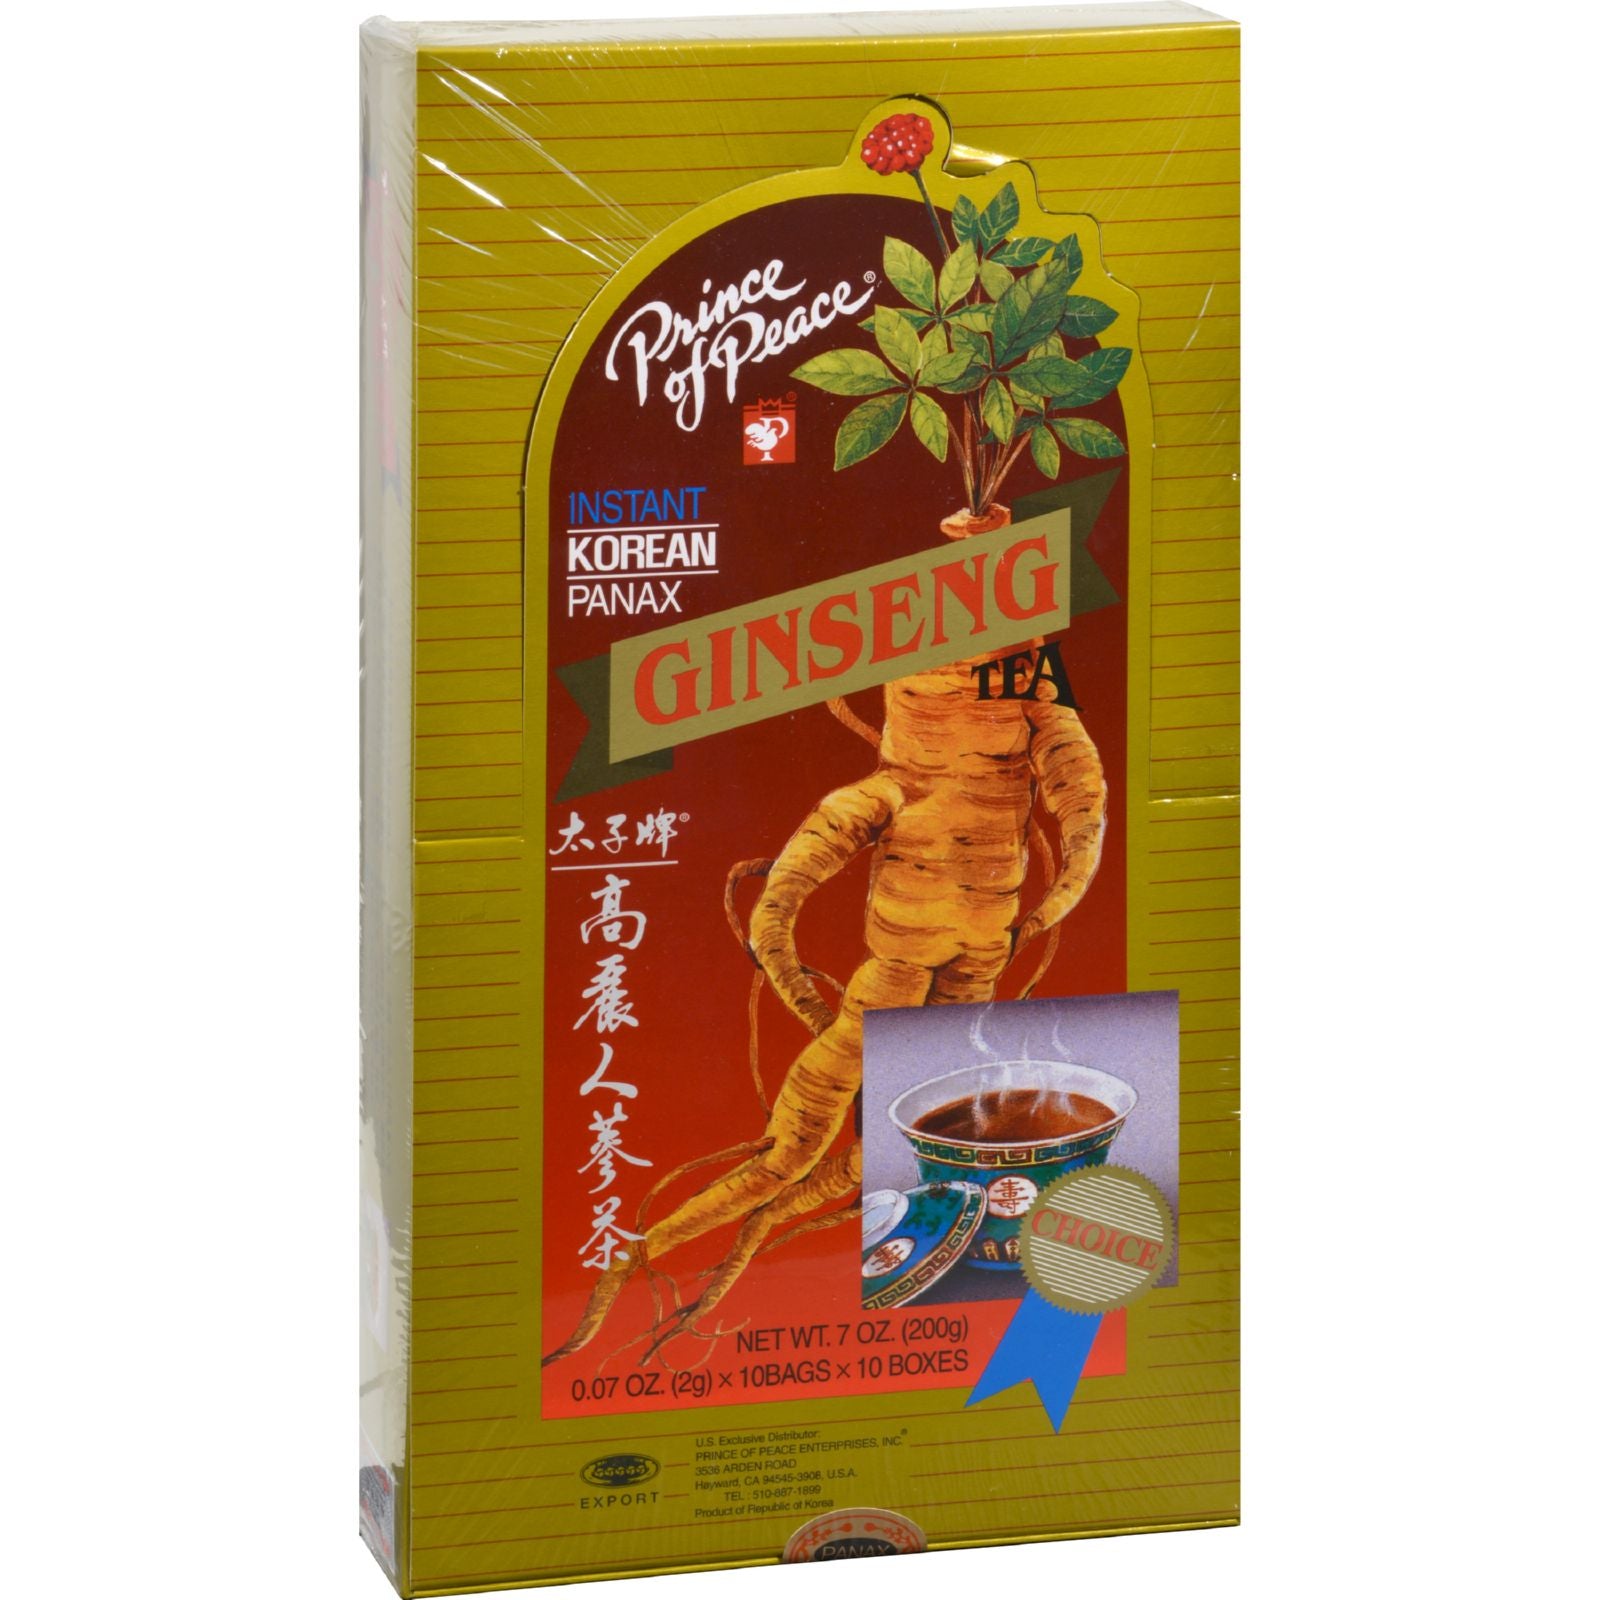 Prince Of Peace Instant Korean Panax Ginseng Tea - 100 Tea Bags